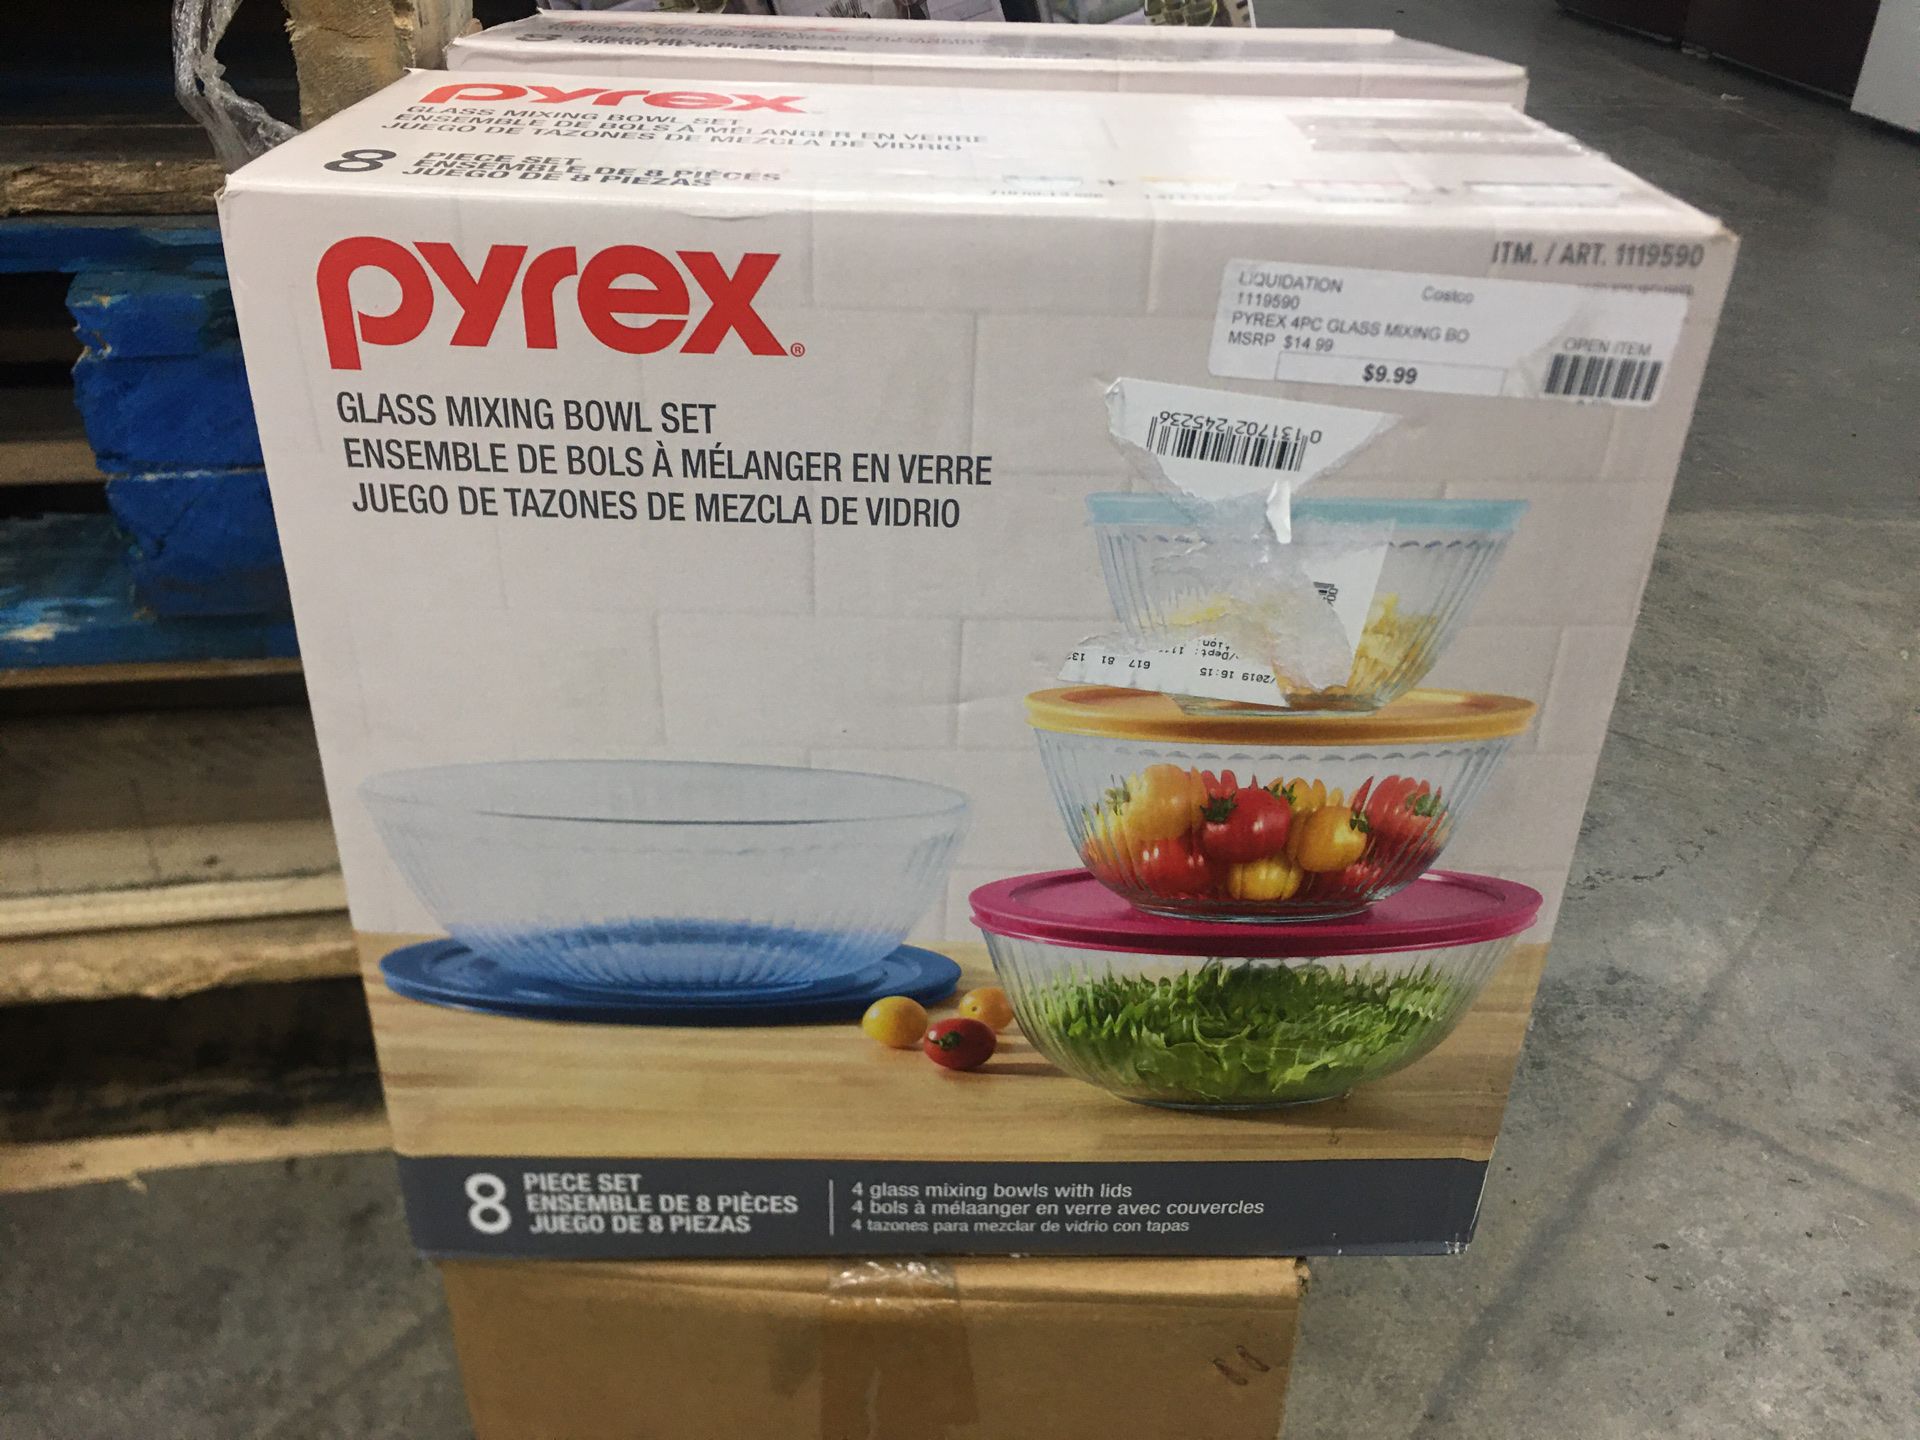 Pyrex glass mixing bowl